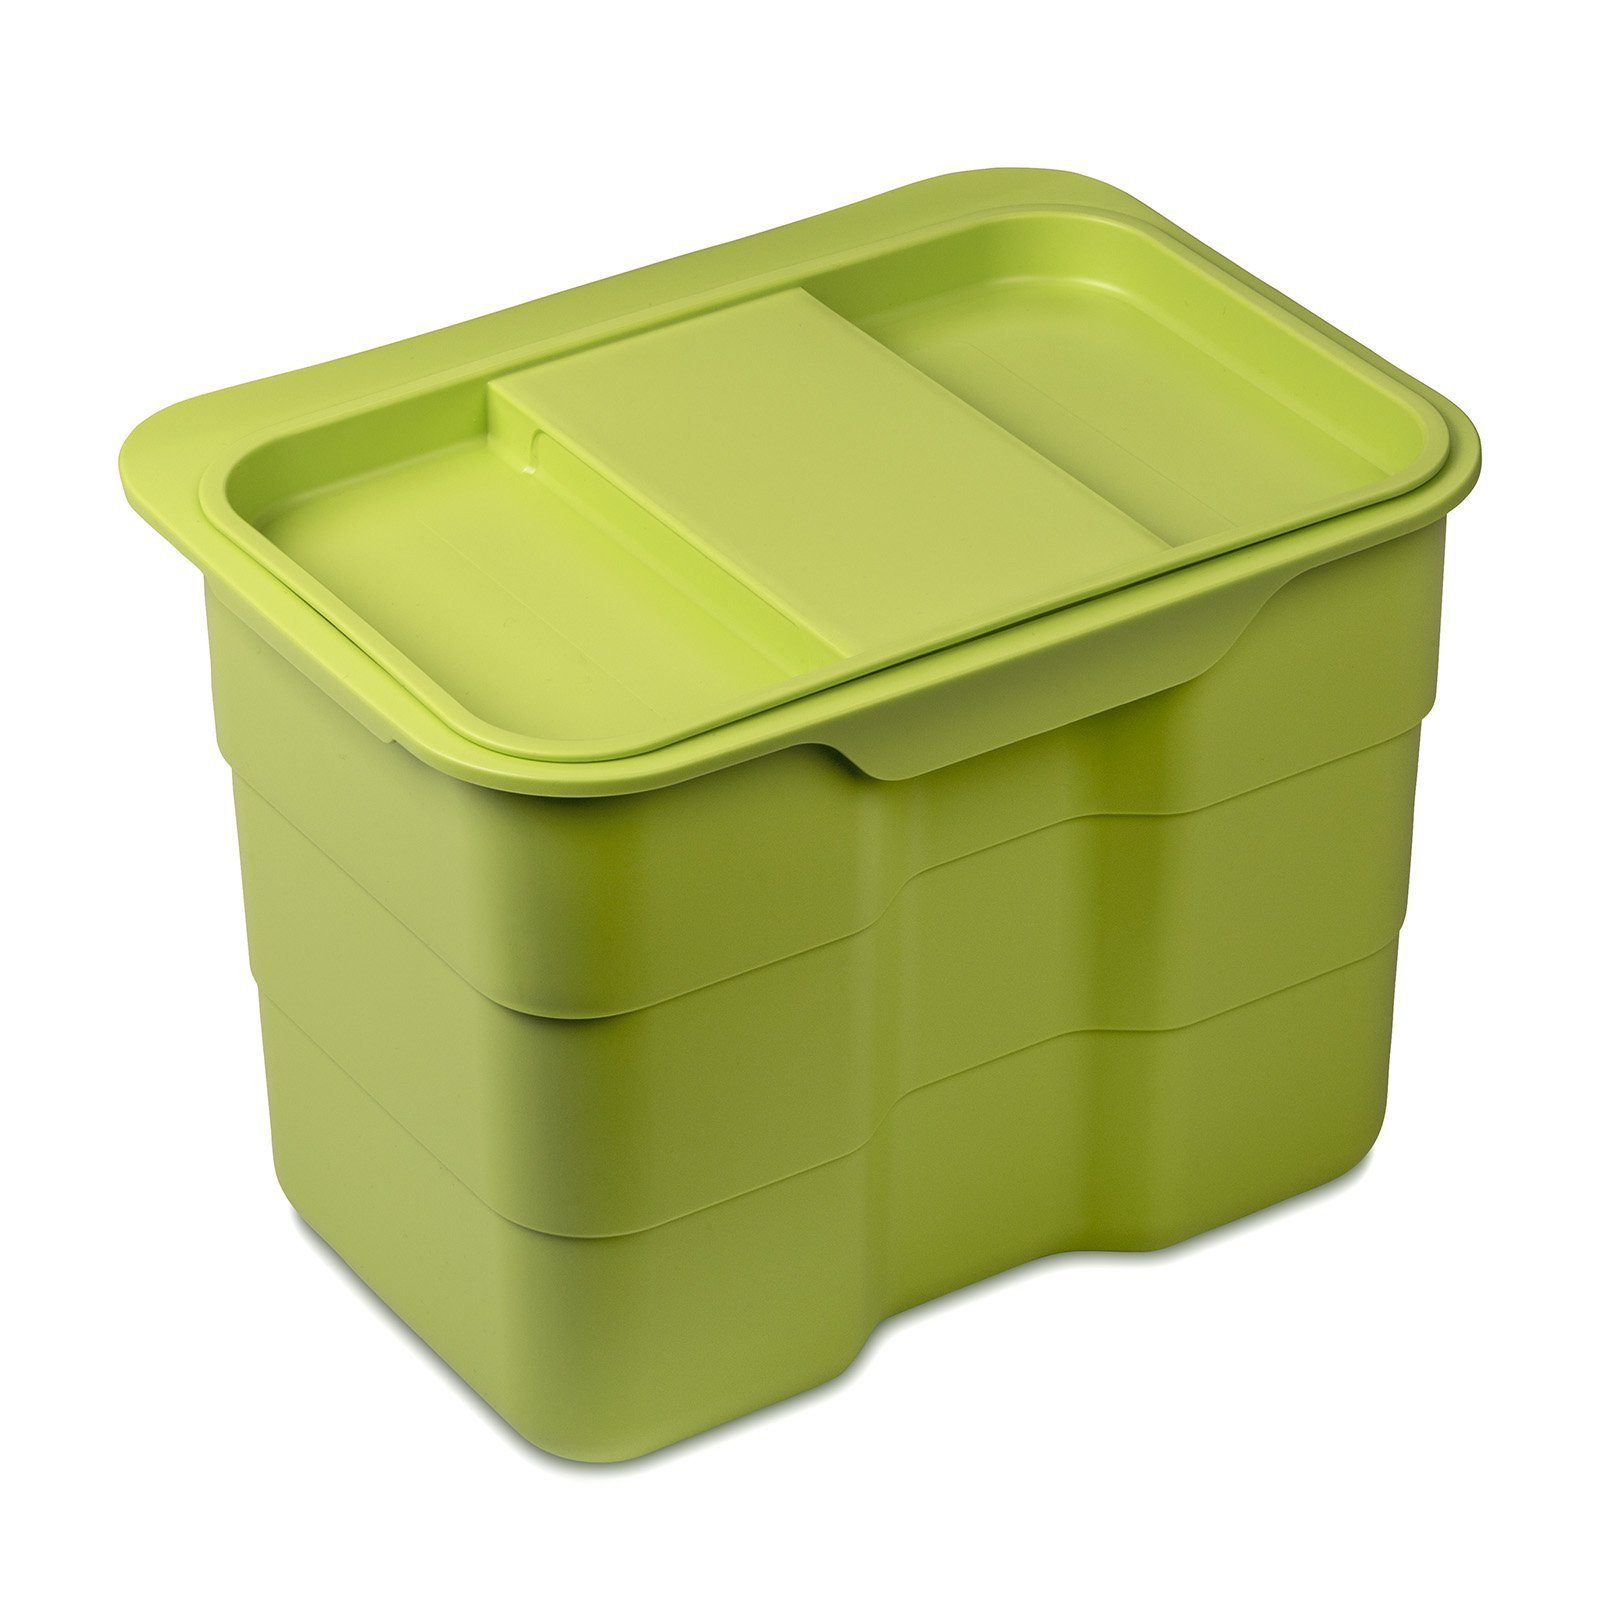 SO-TECH® Mülltrennsystem essensa biobin mit Deckel 4,2 L Multifunktionsbehälter, wahlweise in grau/grün/anthrazit